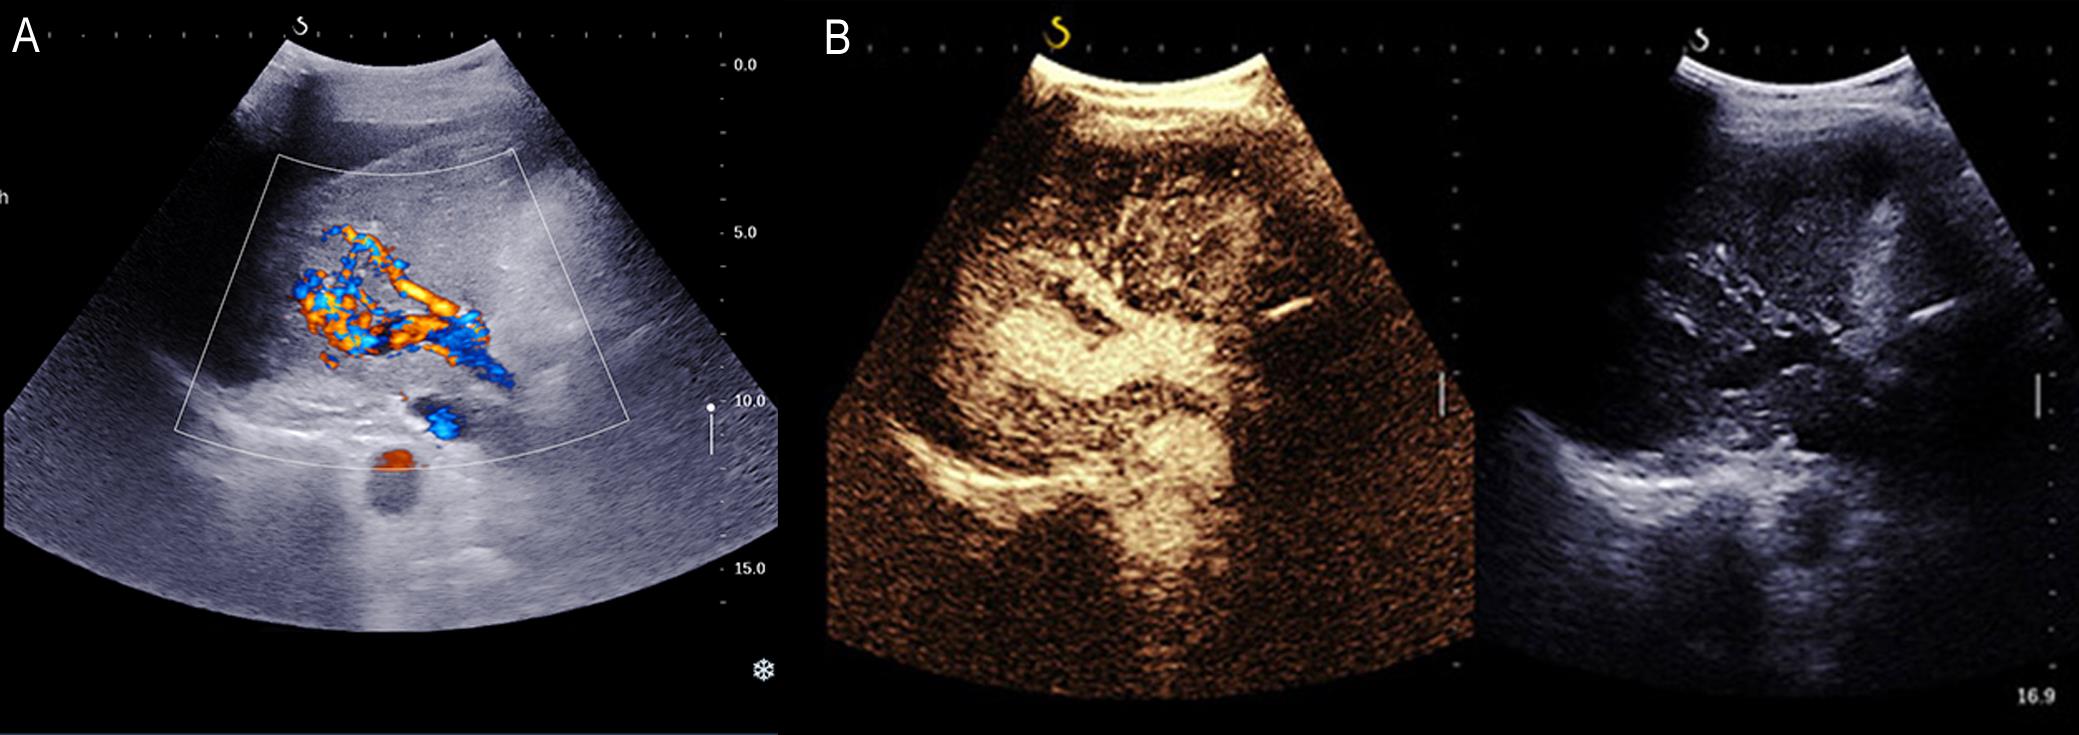 Ultrasound image showing HAPFs under Doppler (A) and Sonovue contrast (B).